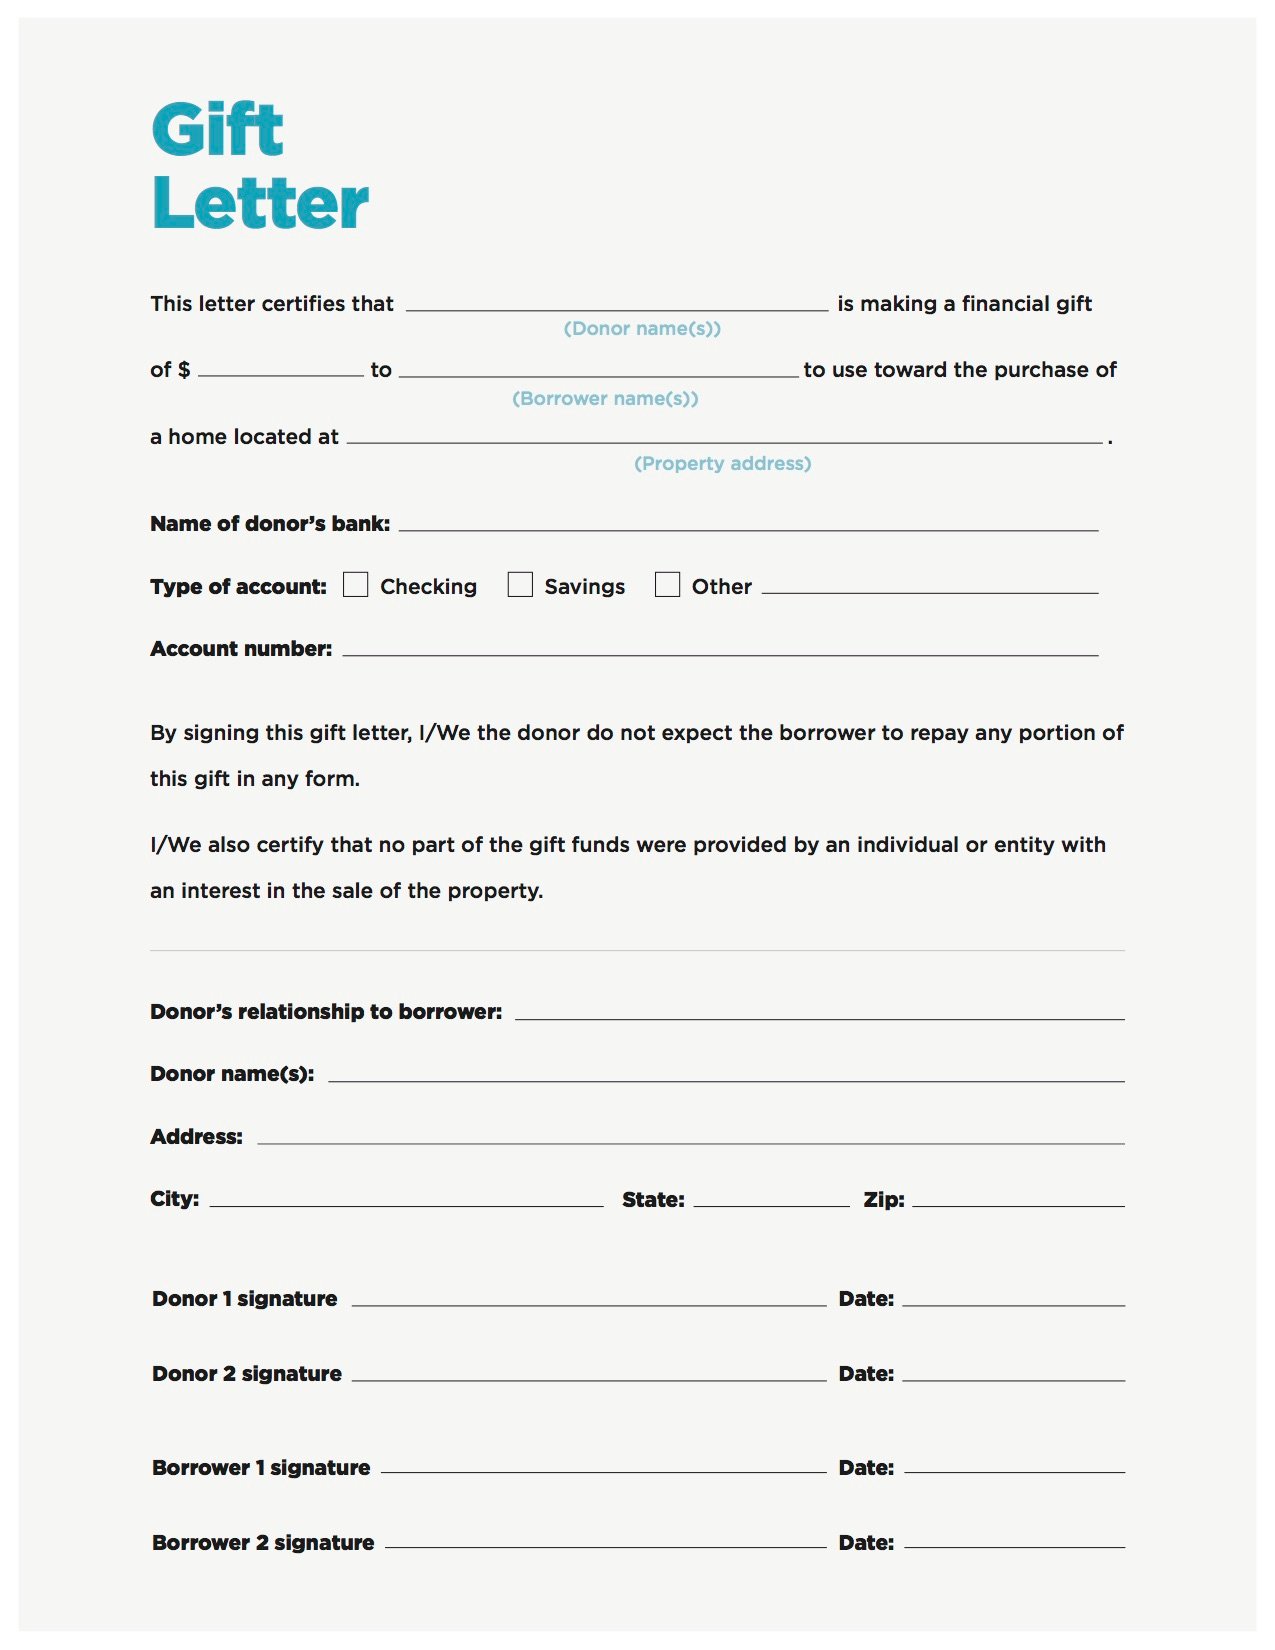 Fha Gift Letter Form from www.nerdwallet.com